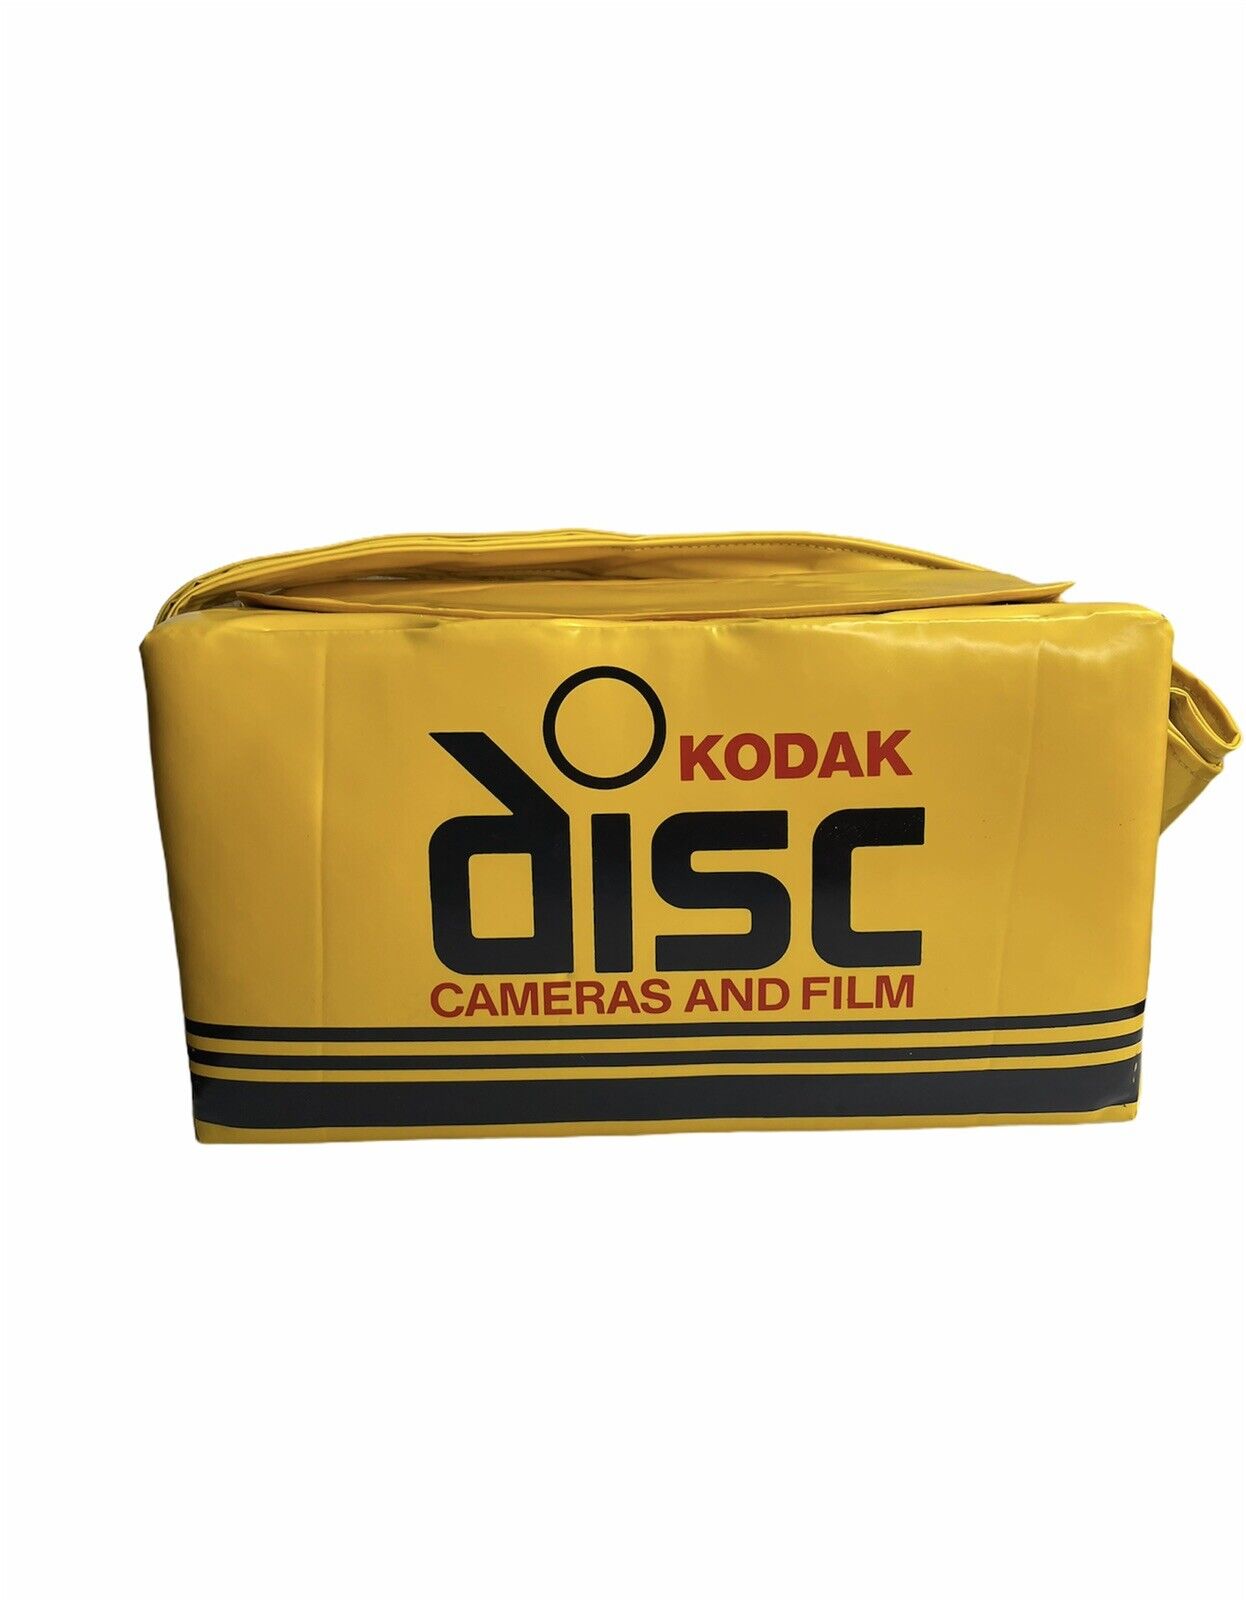 Kodak disc camera cooler shoulder Don't miss the Max 74% OFF campaign Condition vintage bag Great